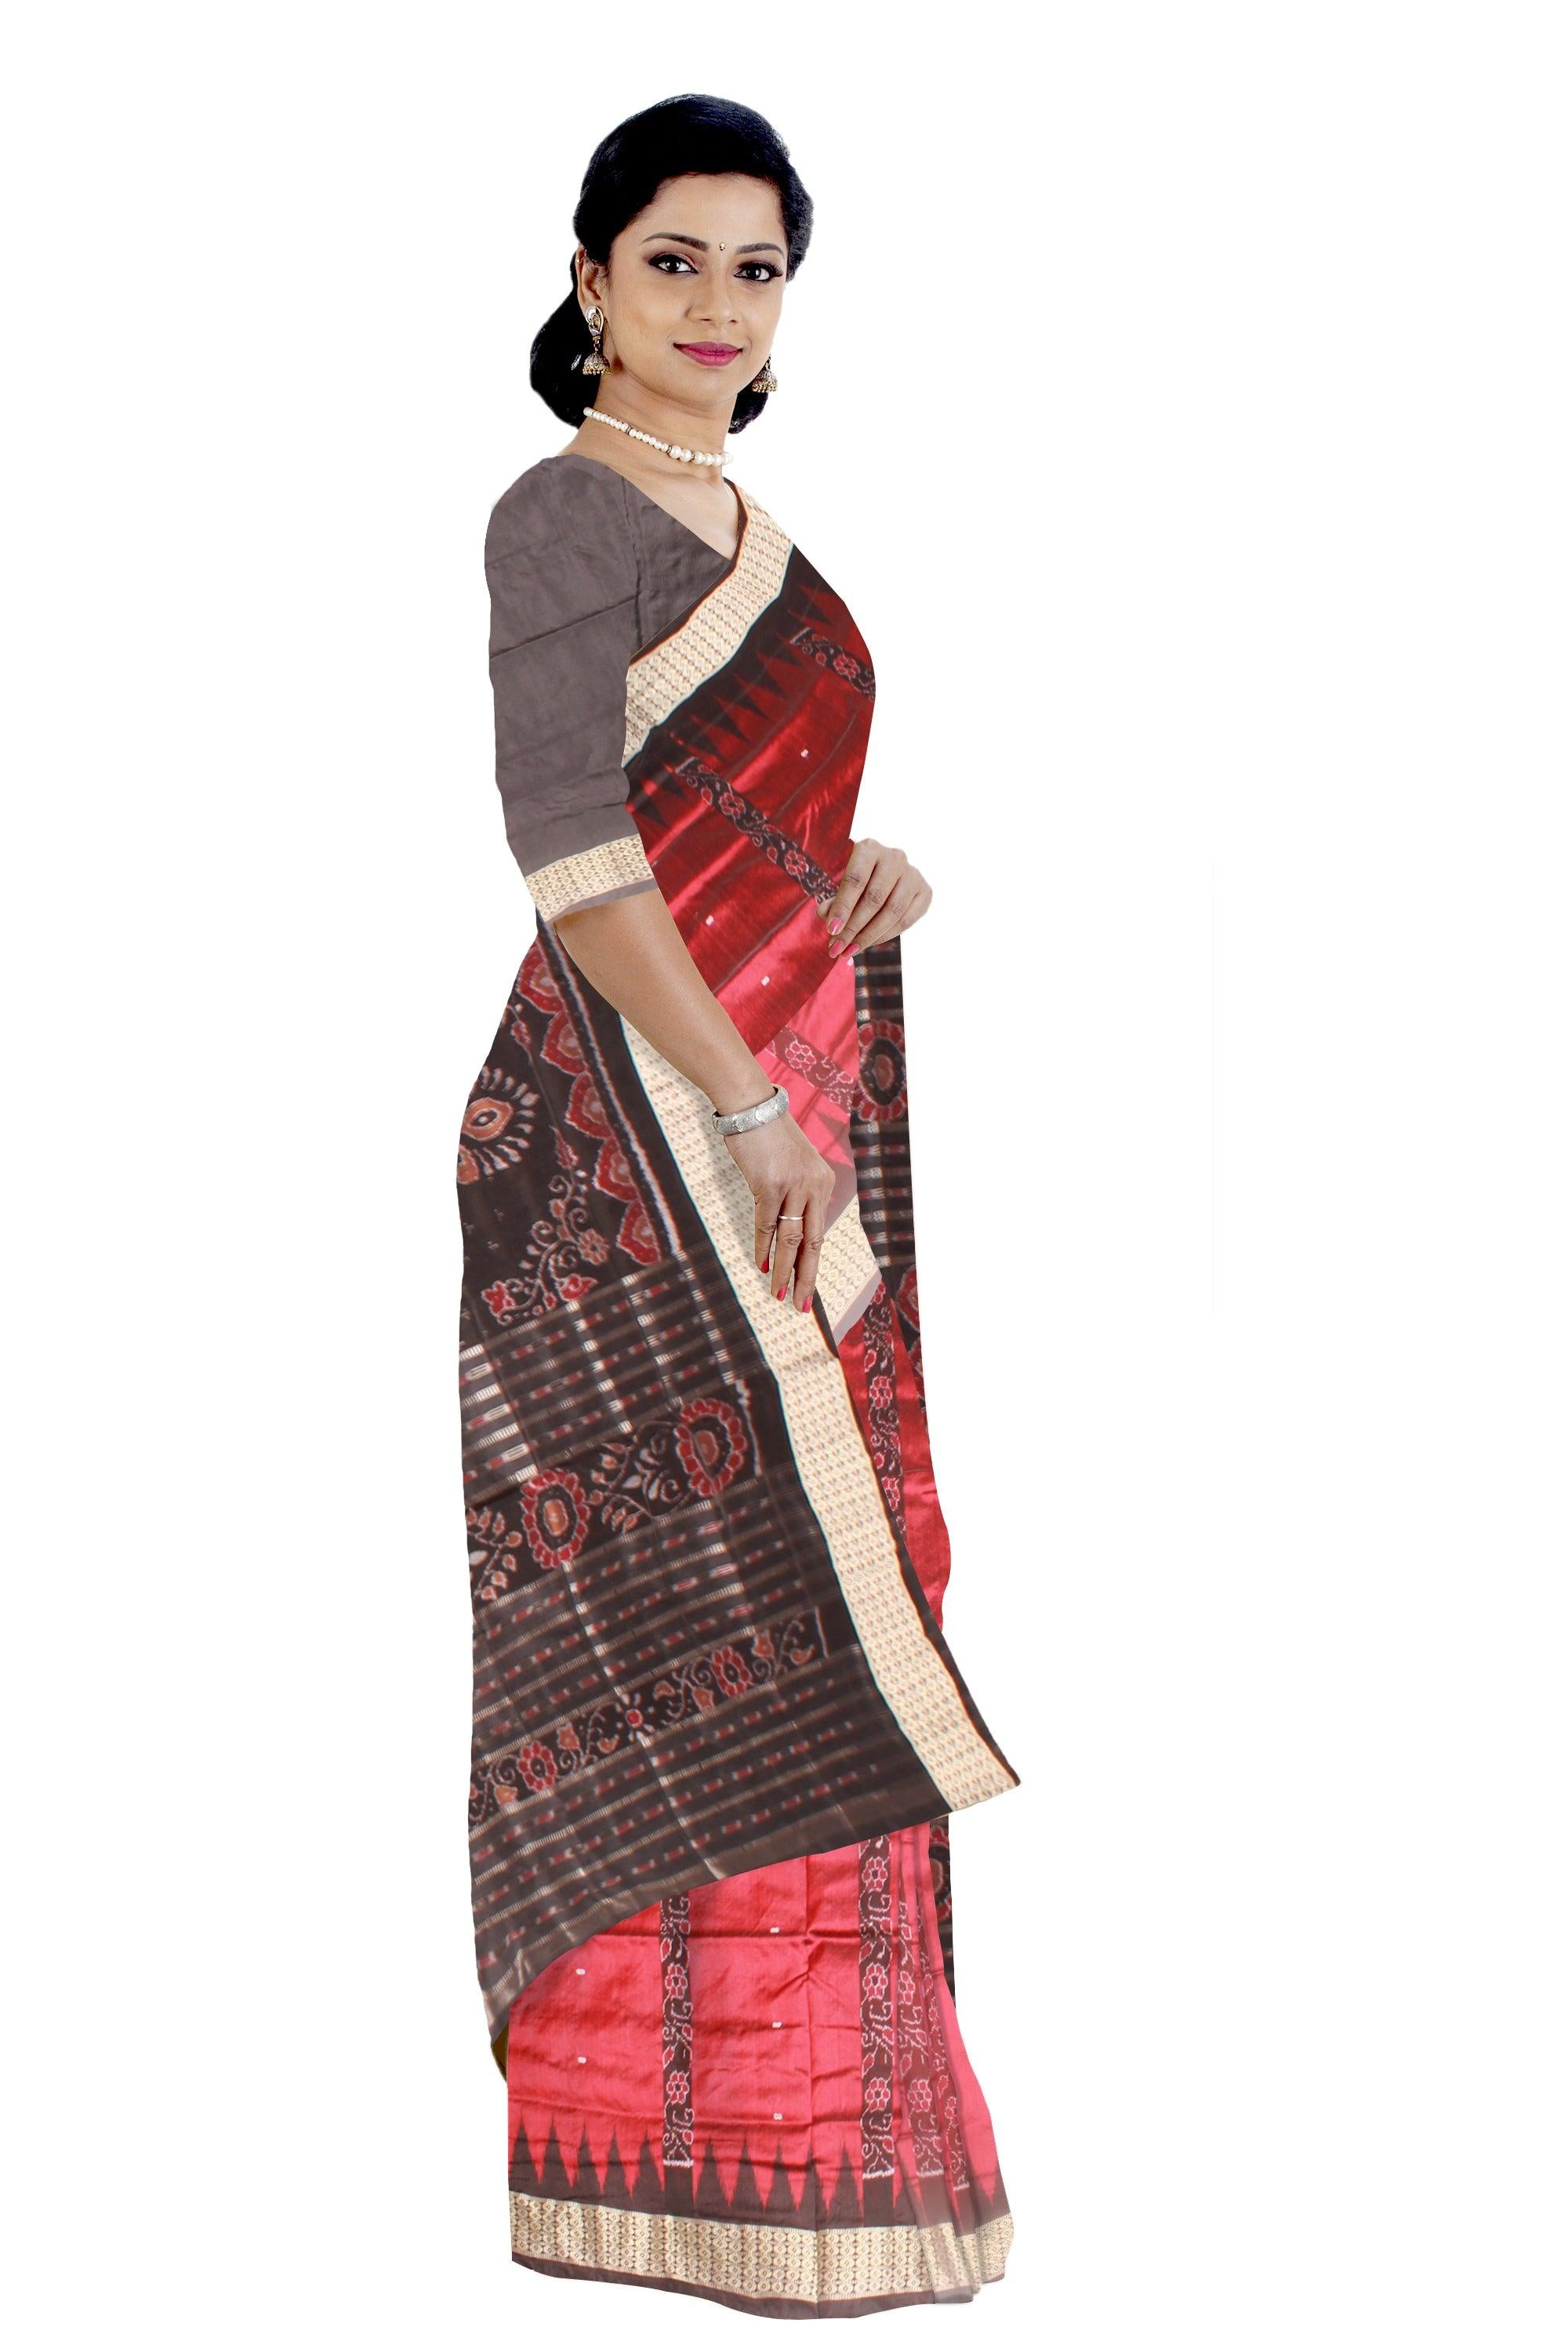 Sambalpuri Pata Saree in Maroon  and Black Color with plain  booty  design with blouse piece. - Koshali Arts & Crafts Enterprise